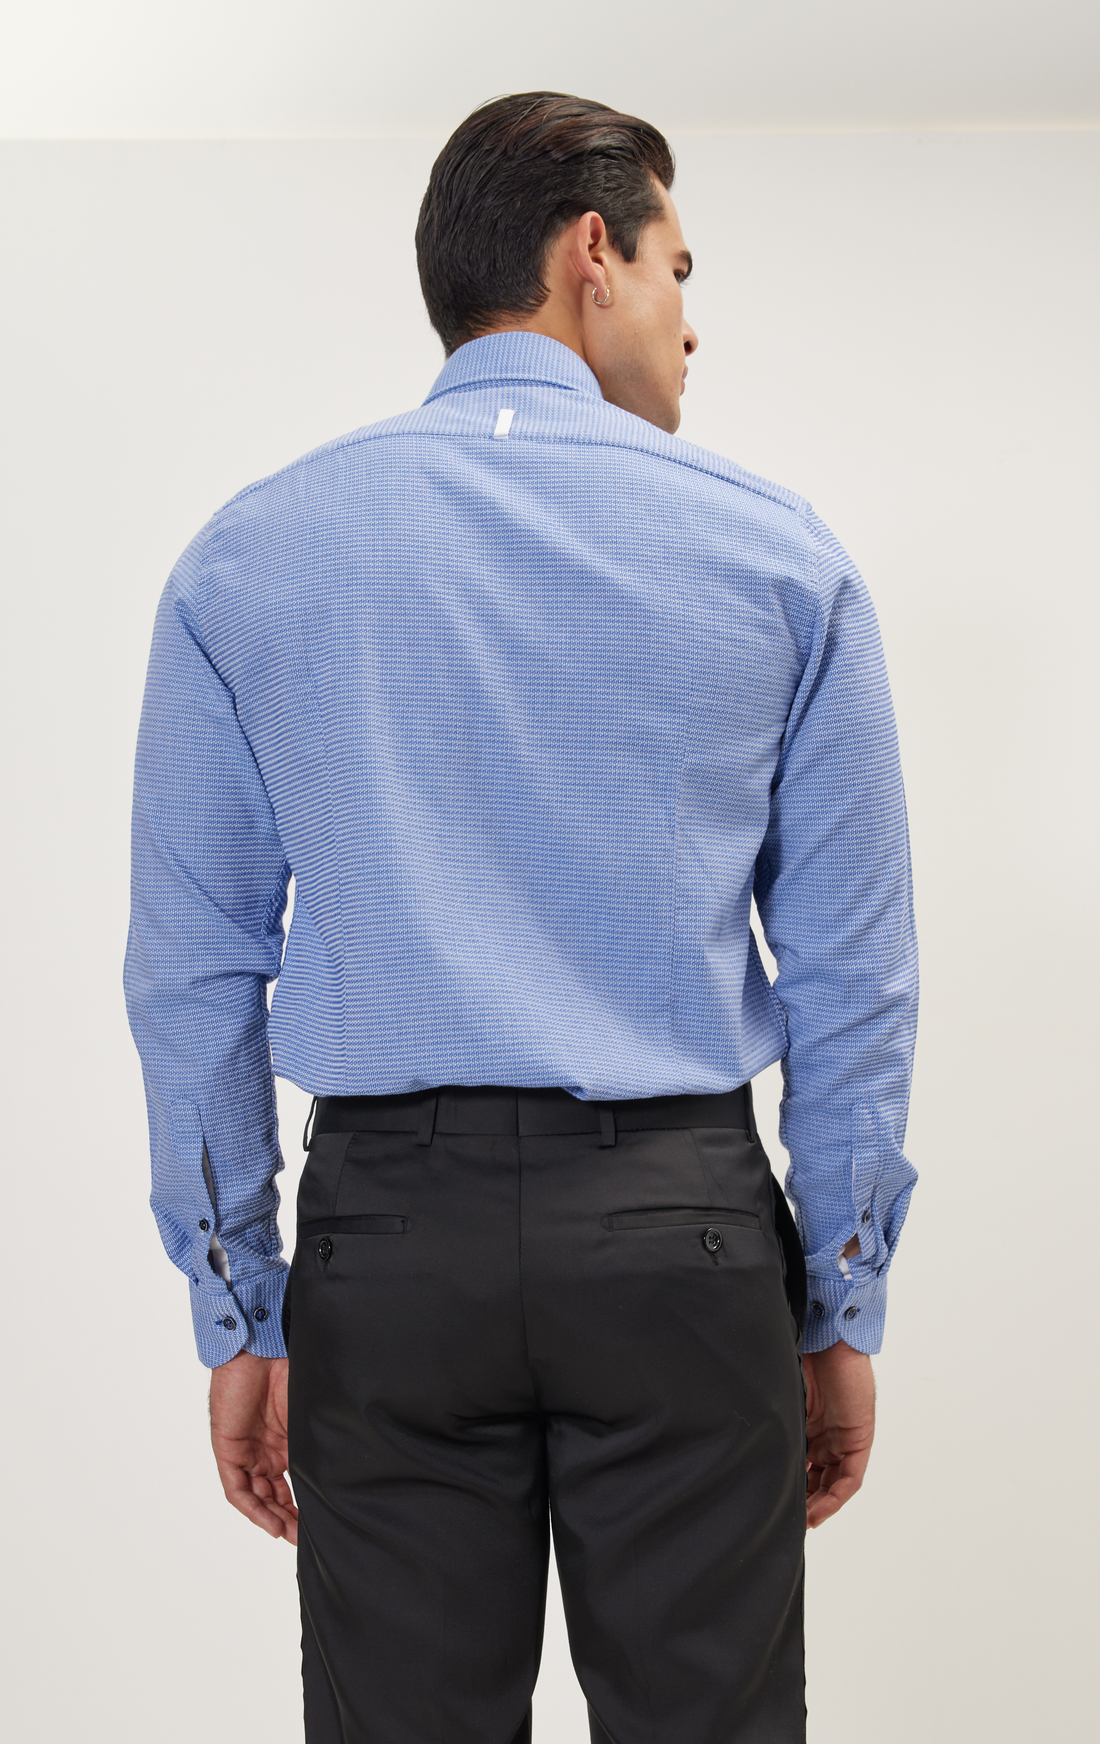 Jacquard Cotton Tonal Button Dress Shirt - Blue